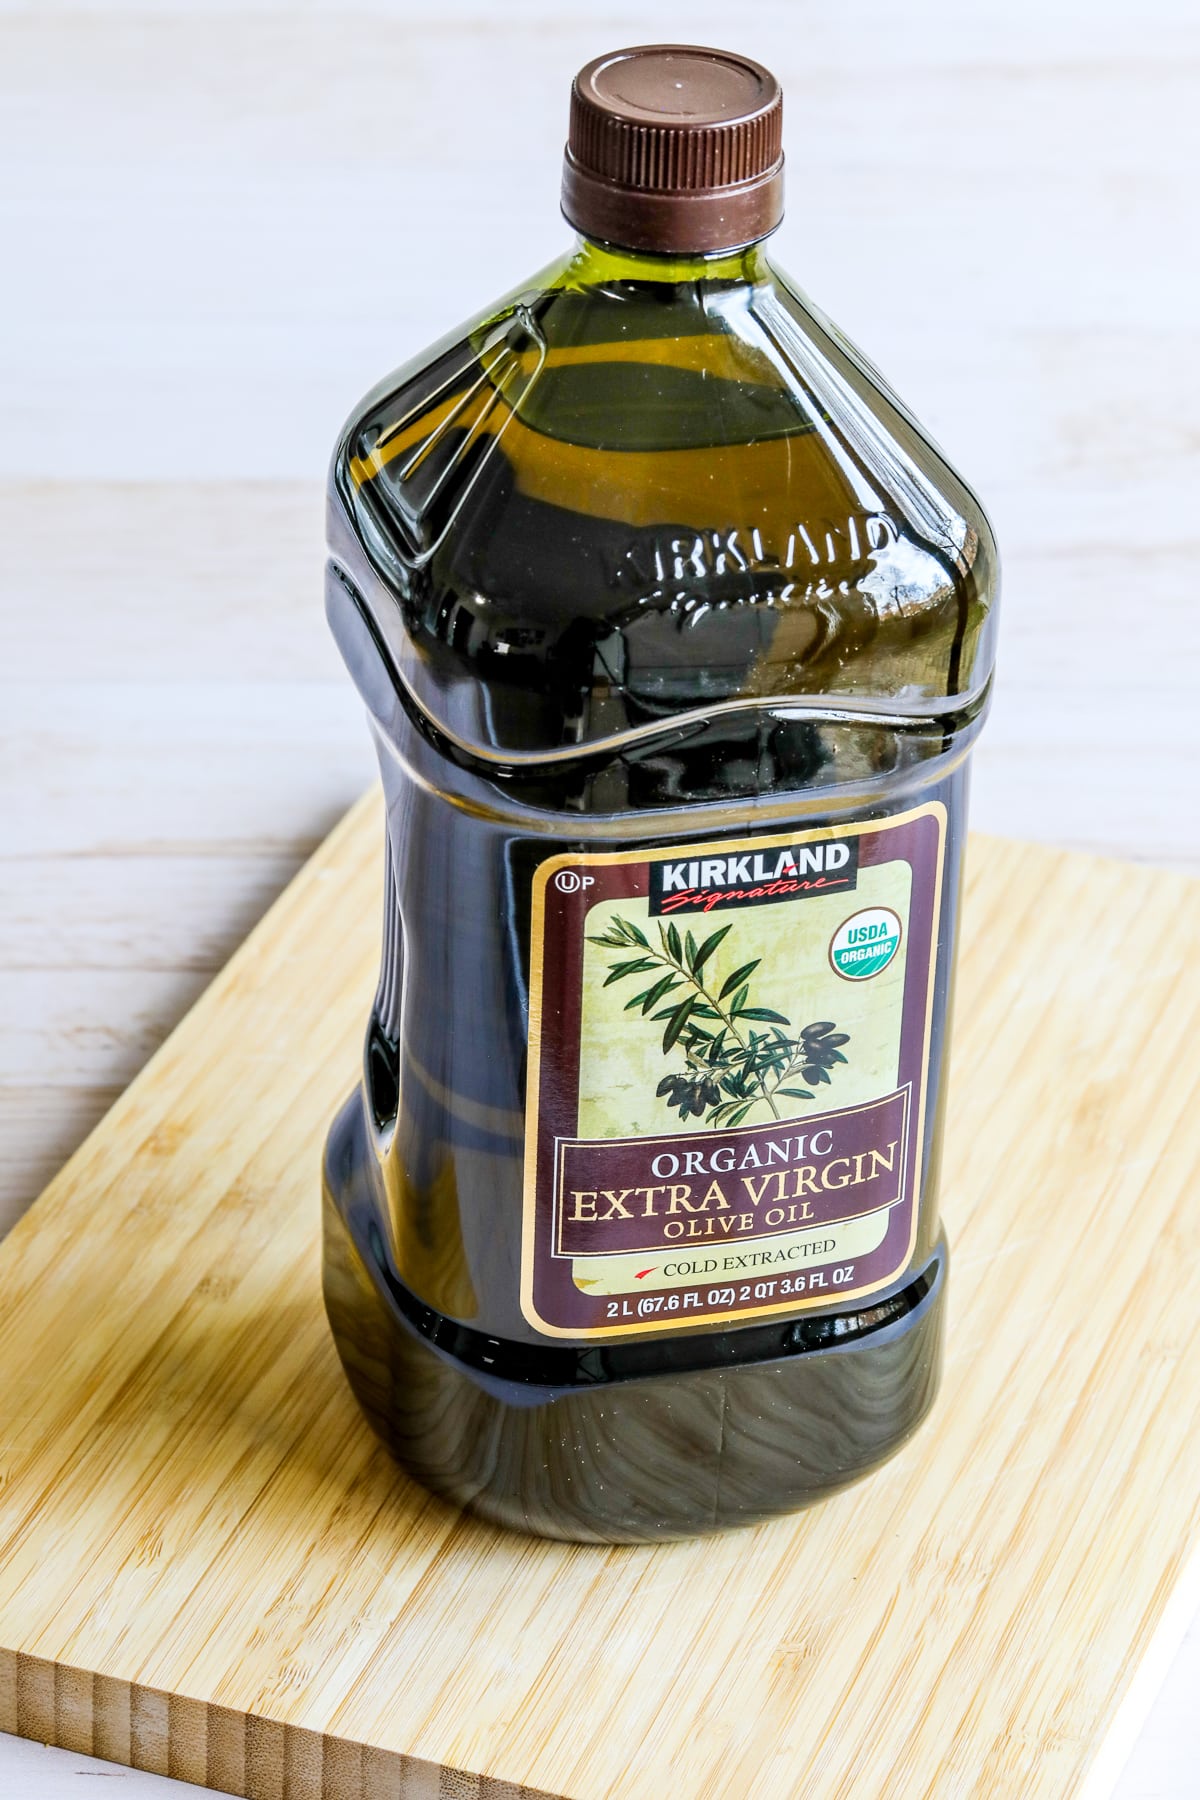 Kirkland Organic Extra-Virgin Olive Oil in bottle, shown on cutting board.